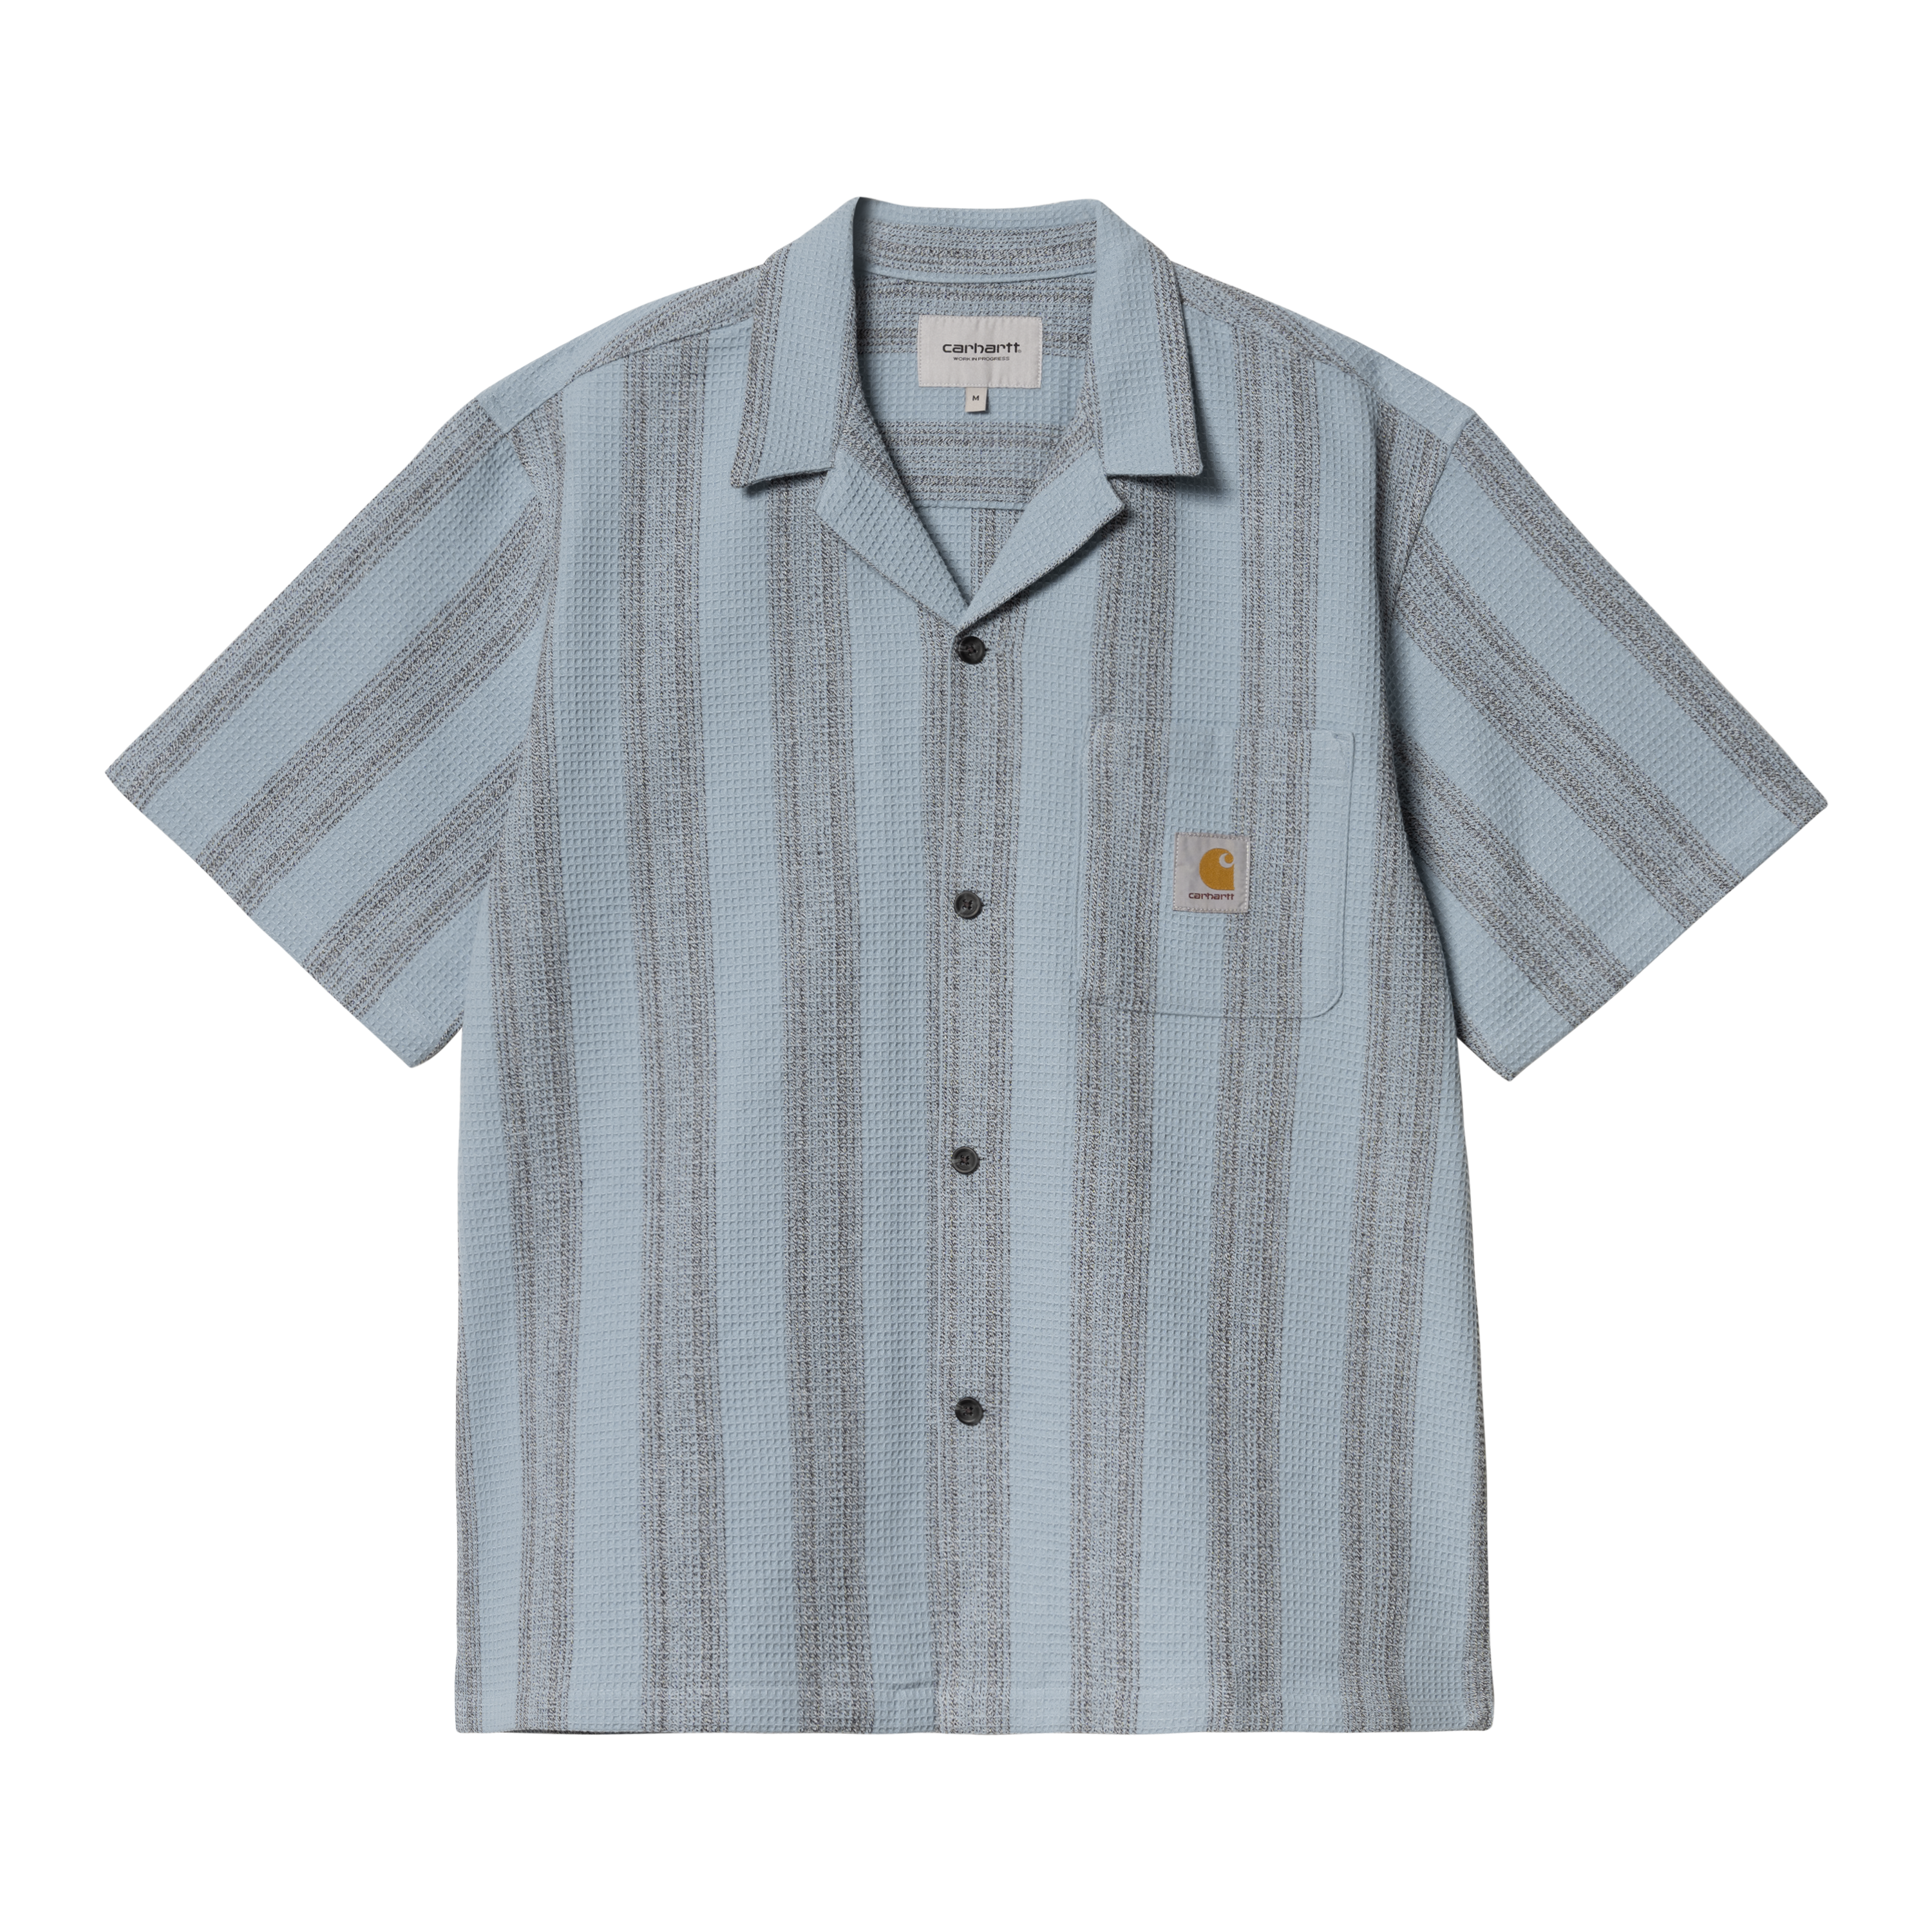 Carhartt WIP Short Sleeve Dodson Shirt in